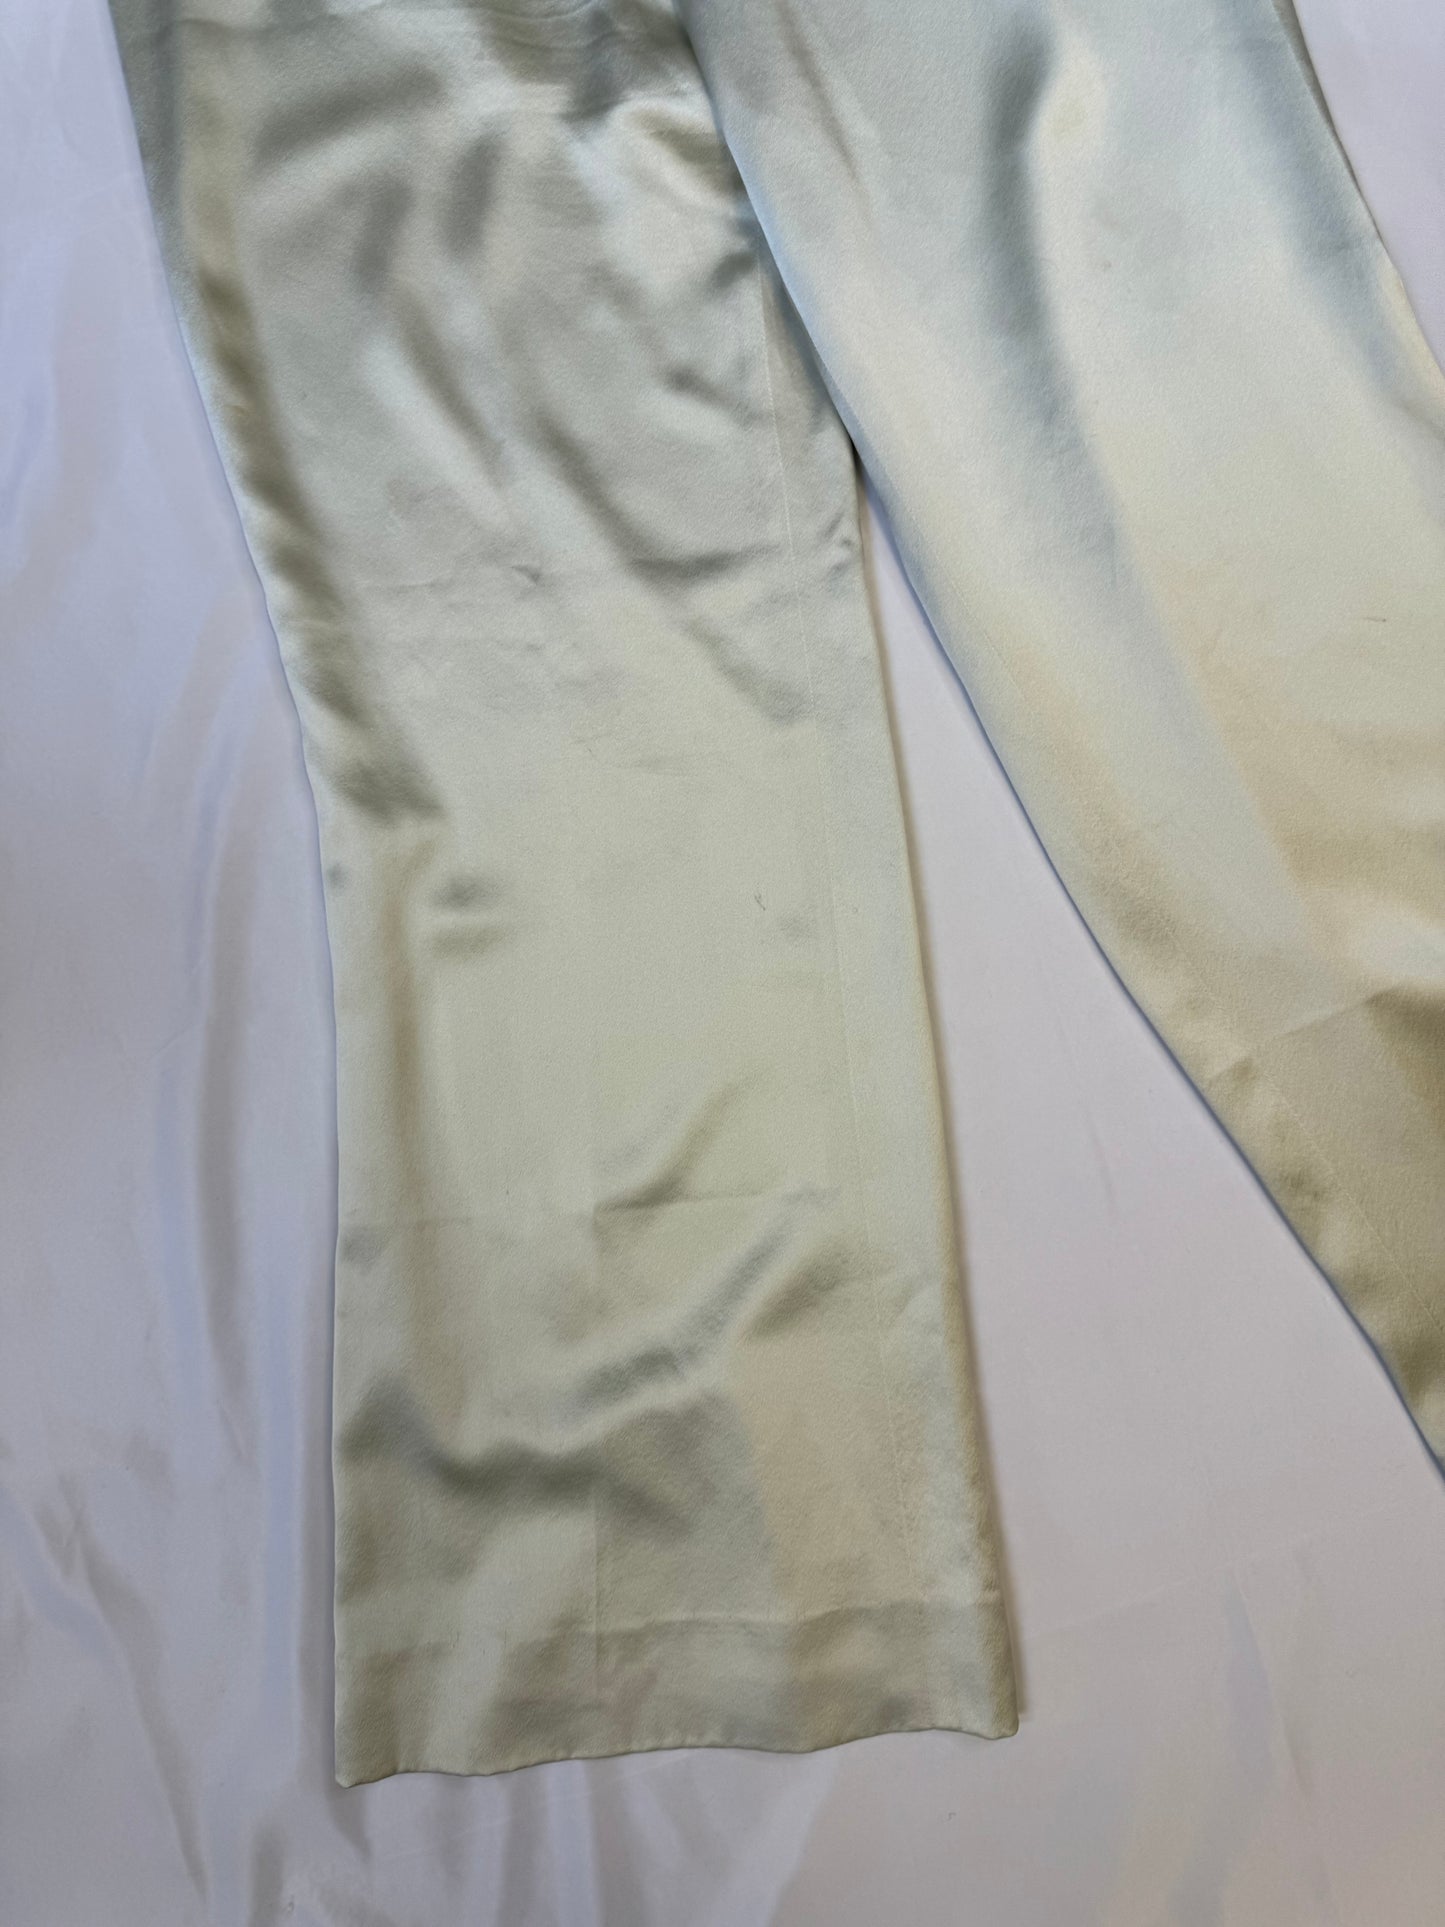 Vintage RL Silk pants